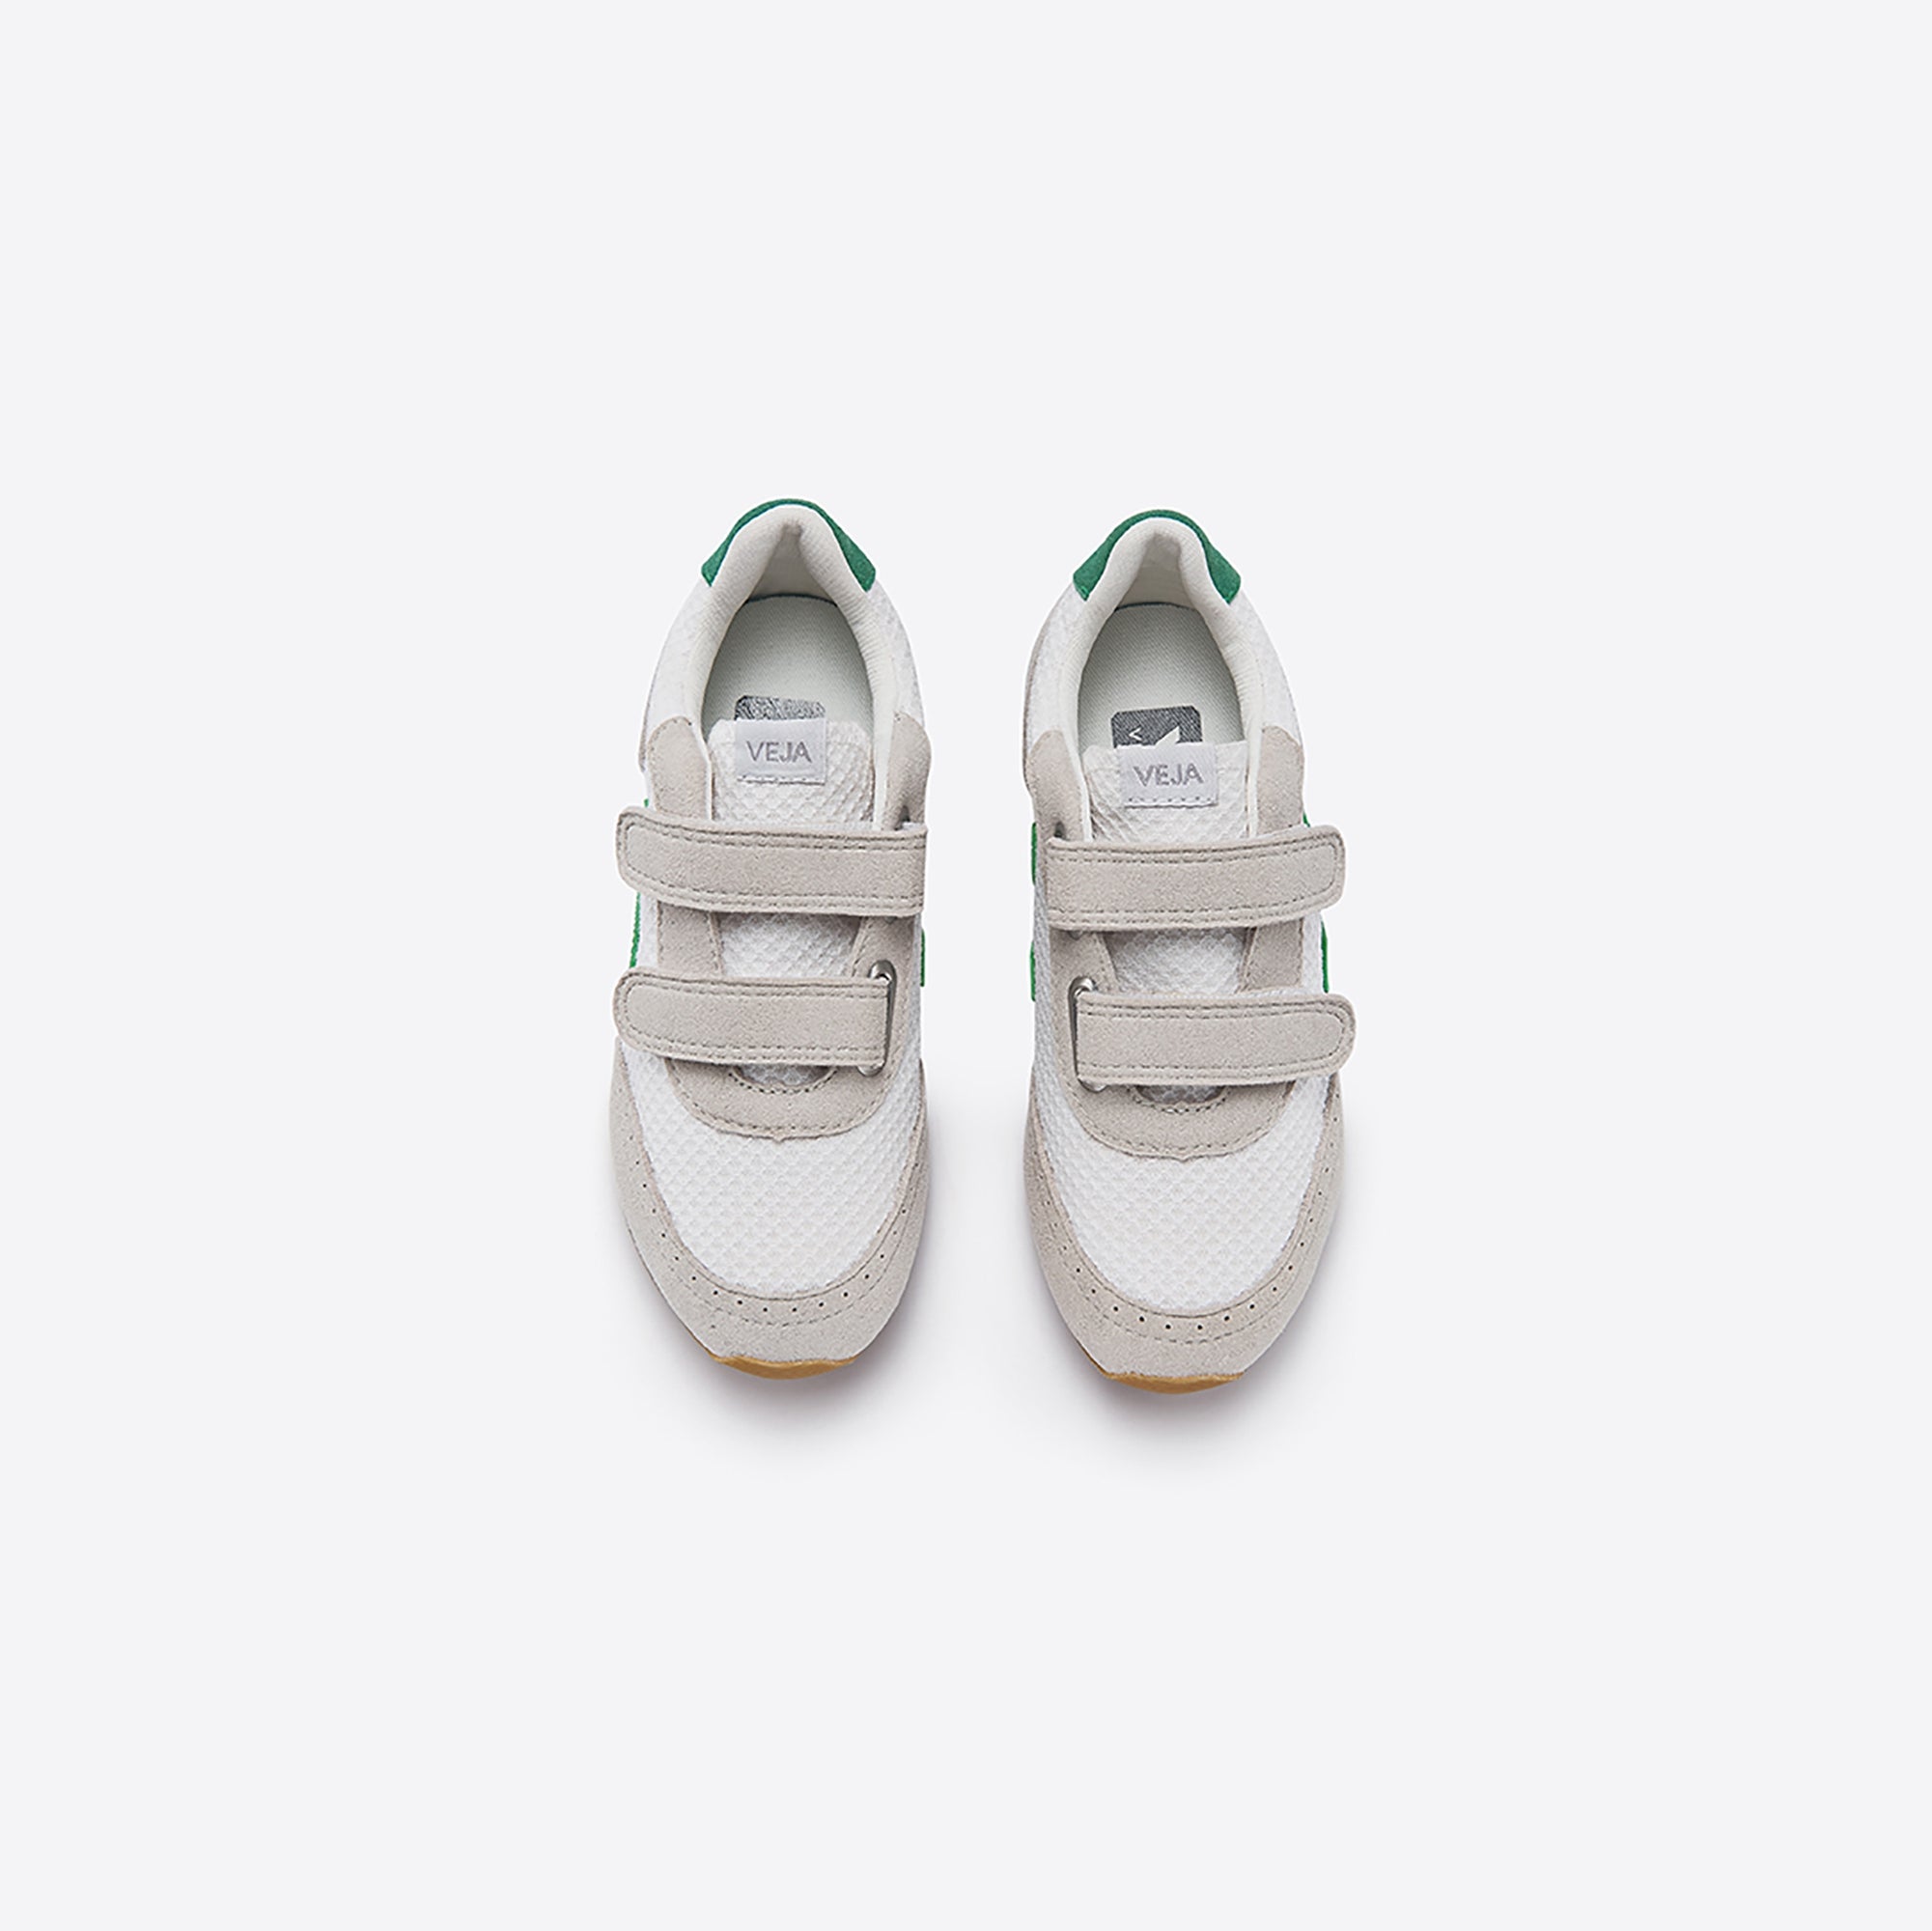 Boys White & Green "V" Shoes